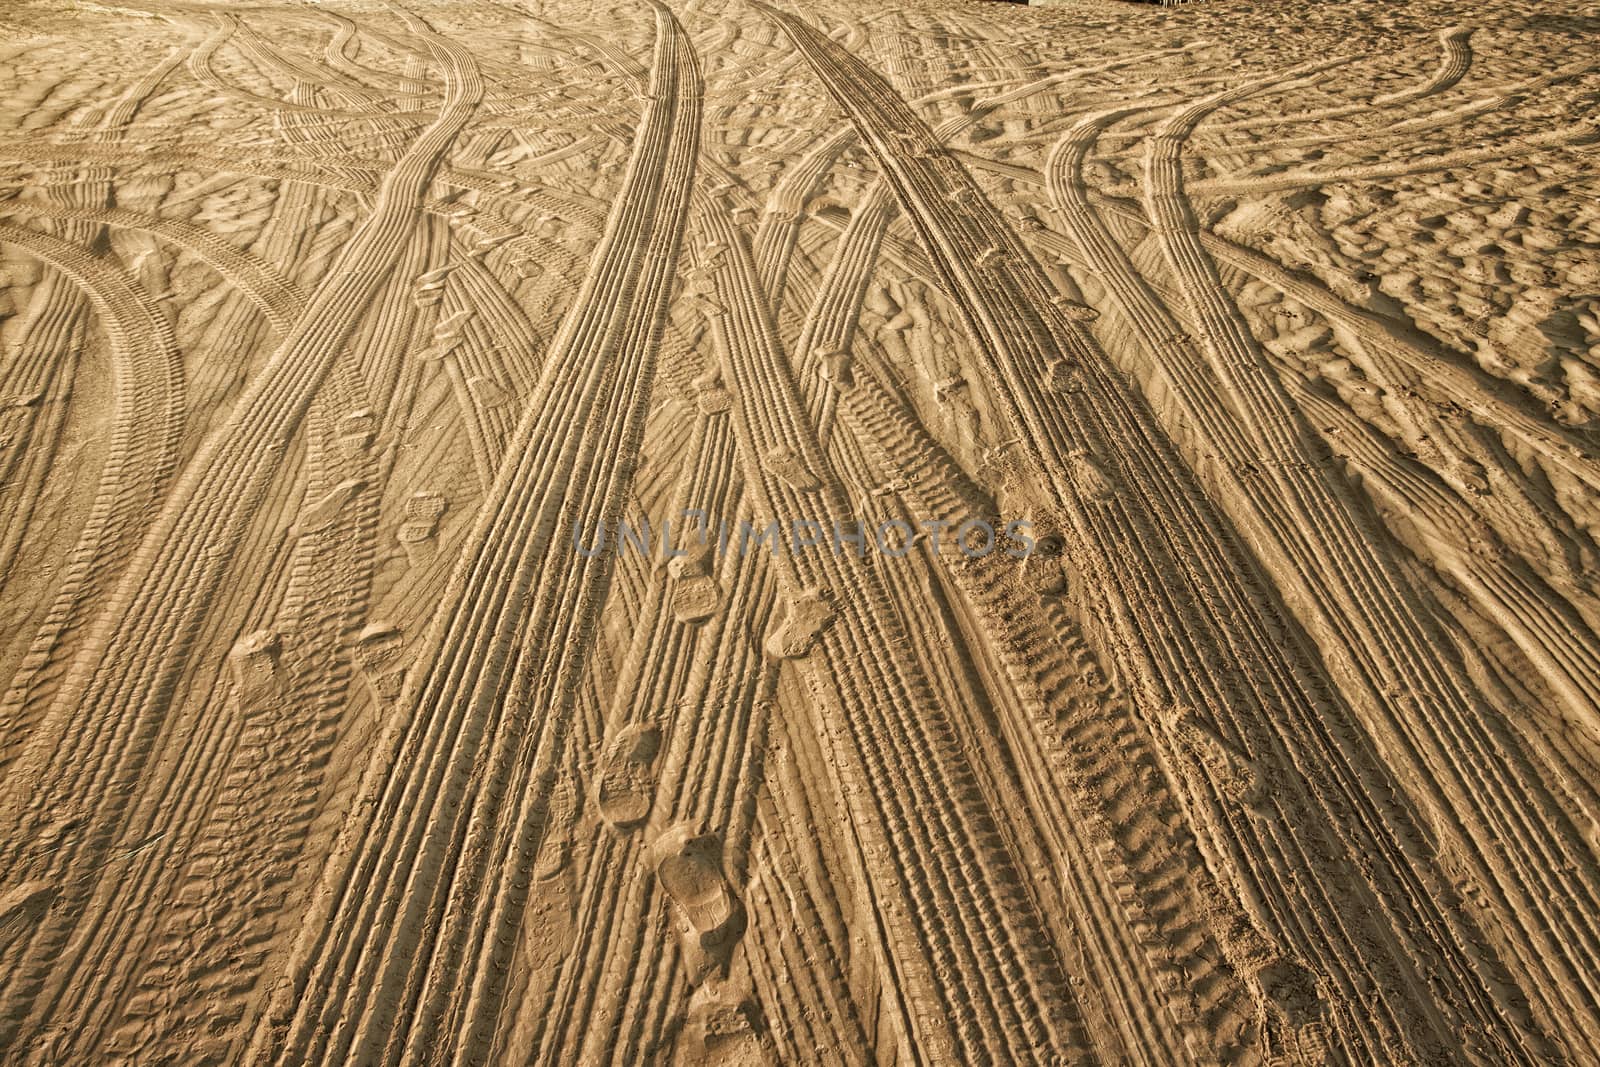 Tracks of cars on the sand in the desert sand